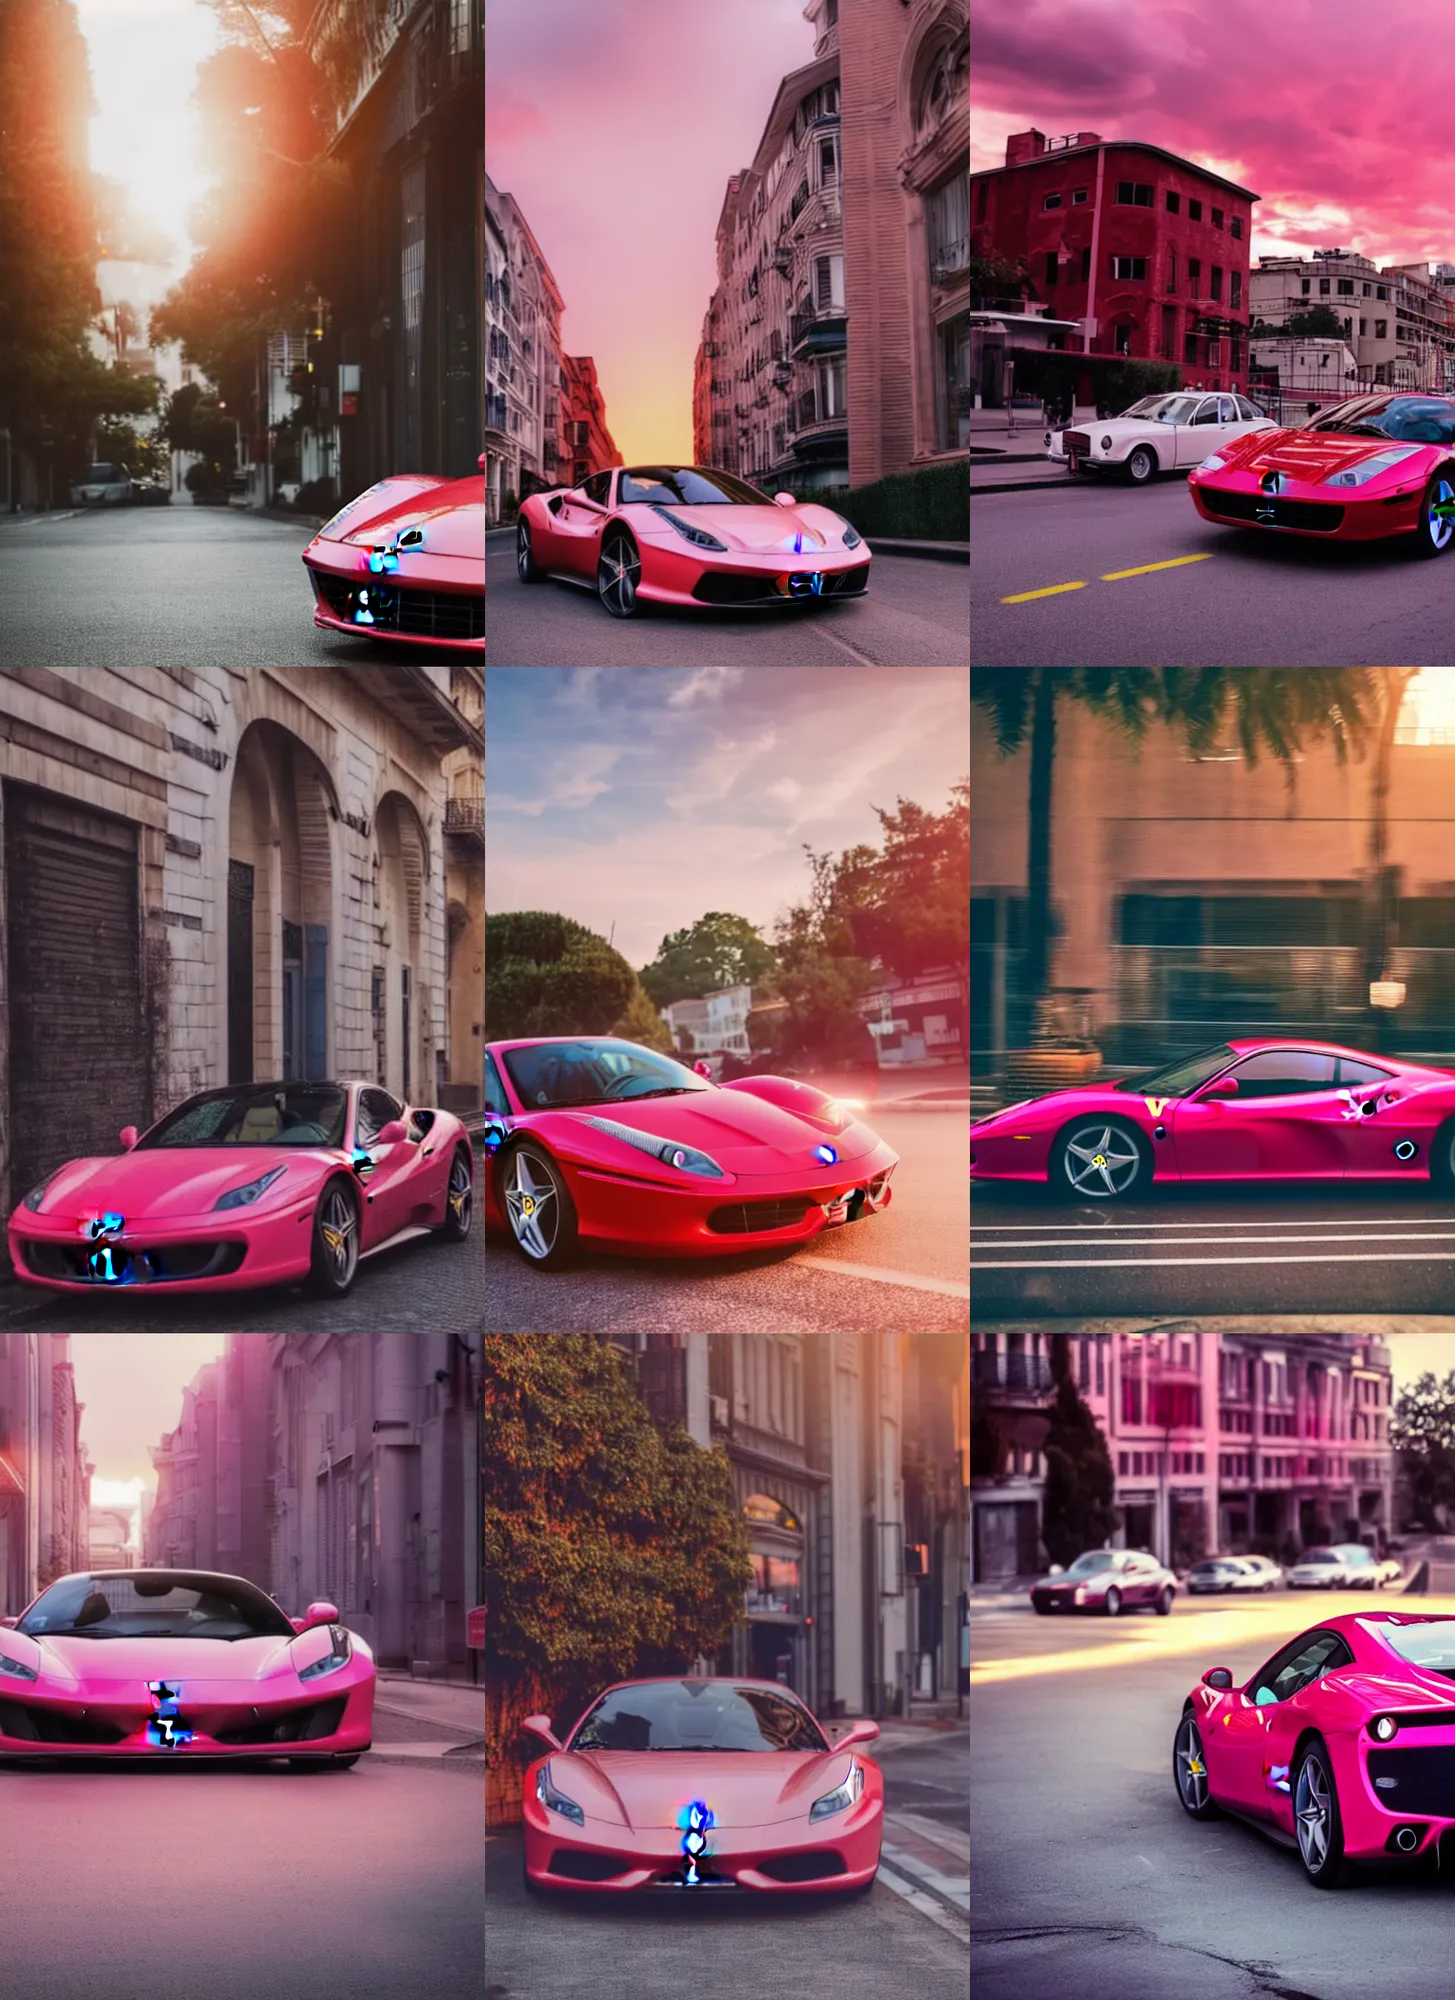 Prompt: a Ferrari car on the street, pink sunset, dramatic lighting